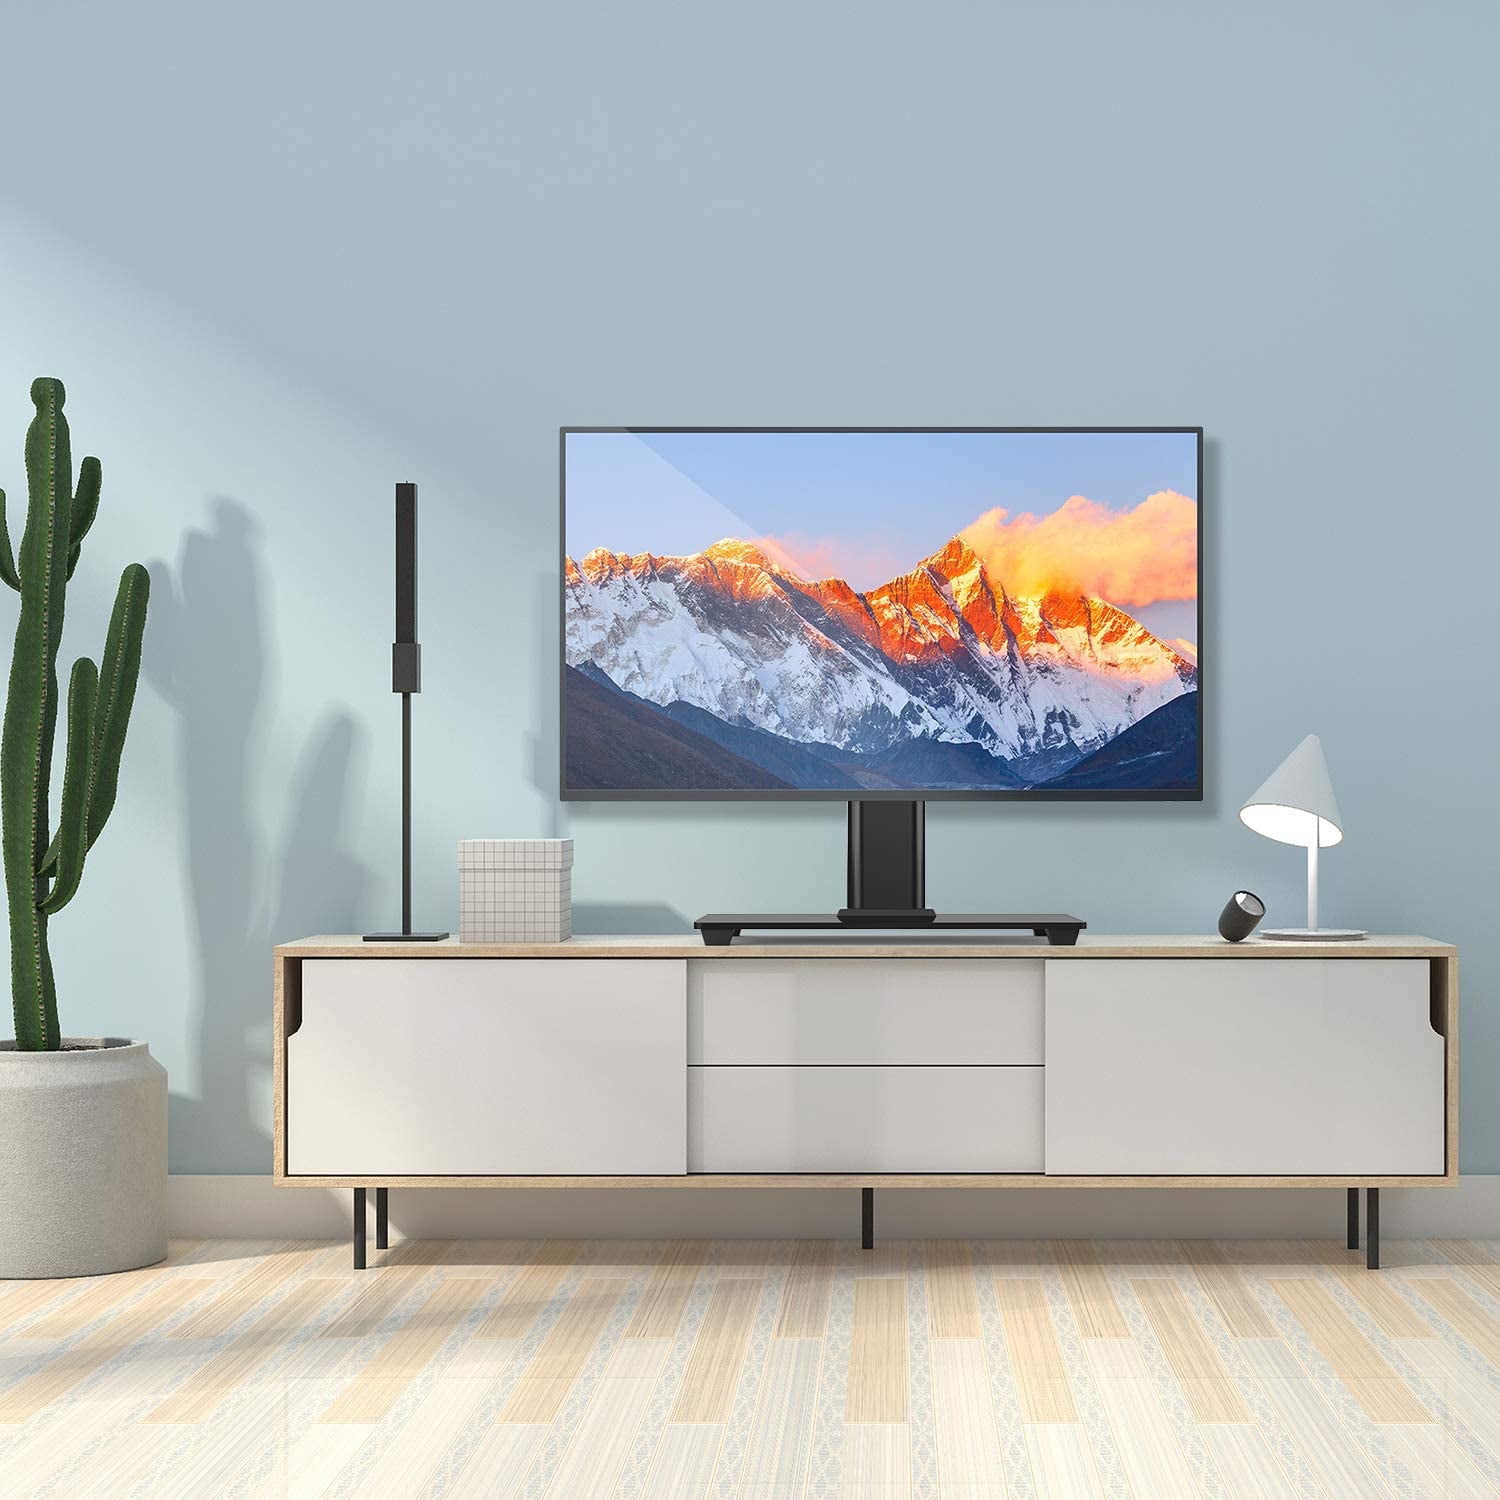 37-55 Inch LCD Wall Mount Bracket Black Glass Base Metal Shelf Bracket TV Stand 